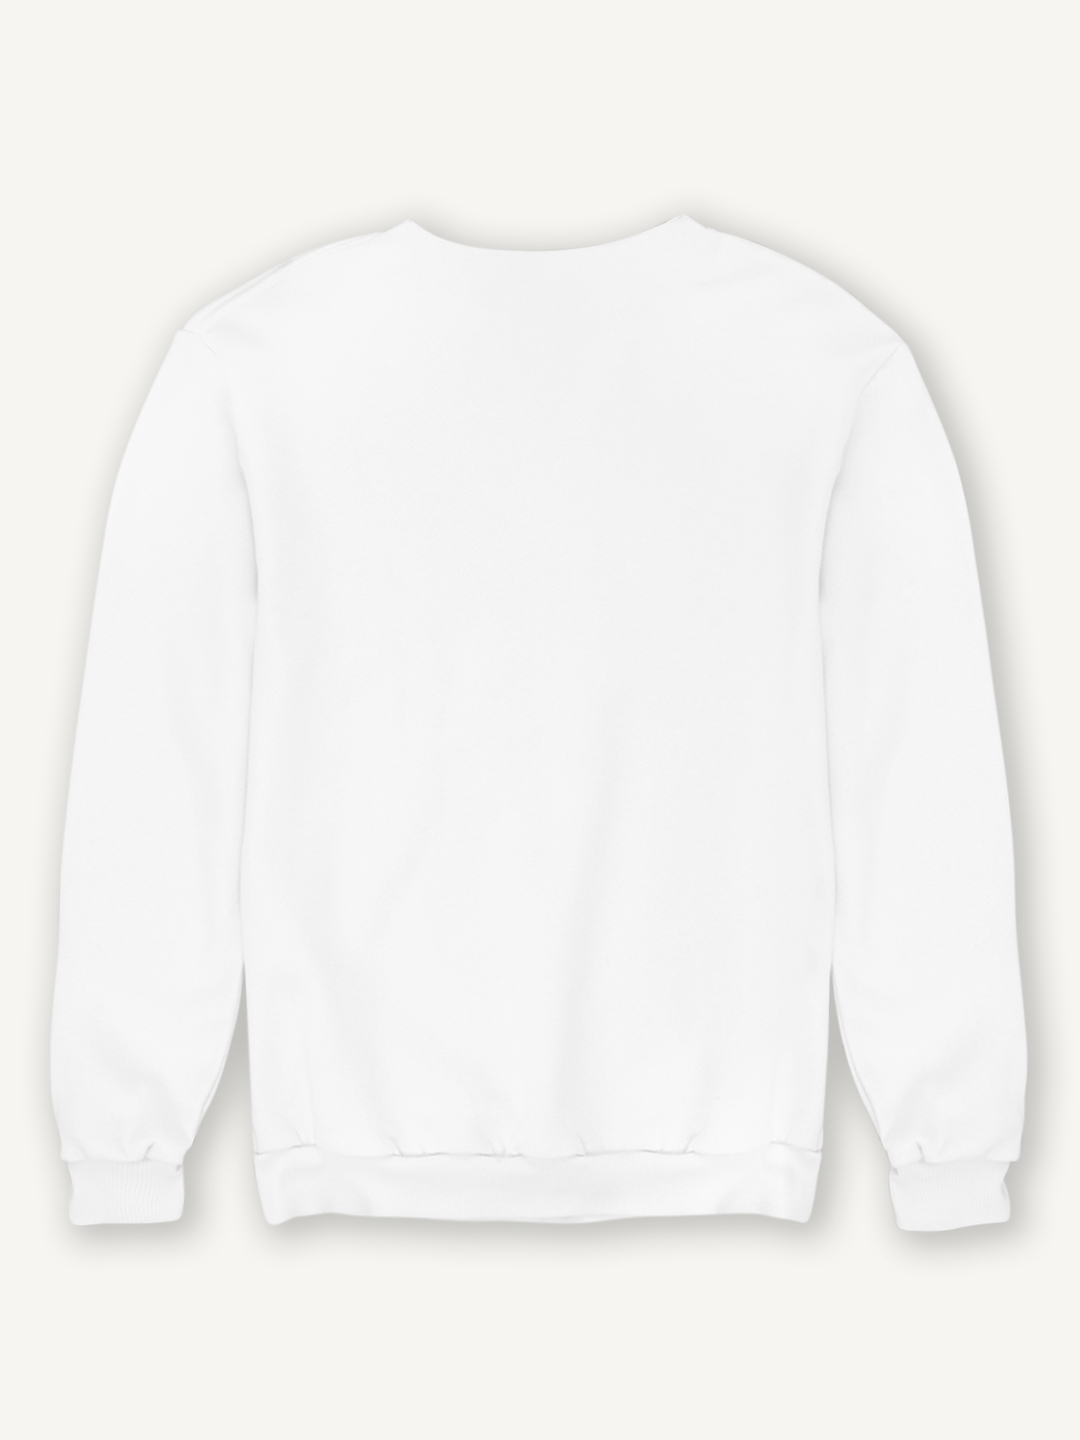 creativeideas.store | Musical Notation White Sweatshirt